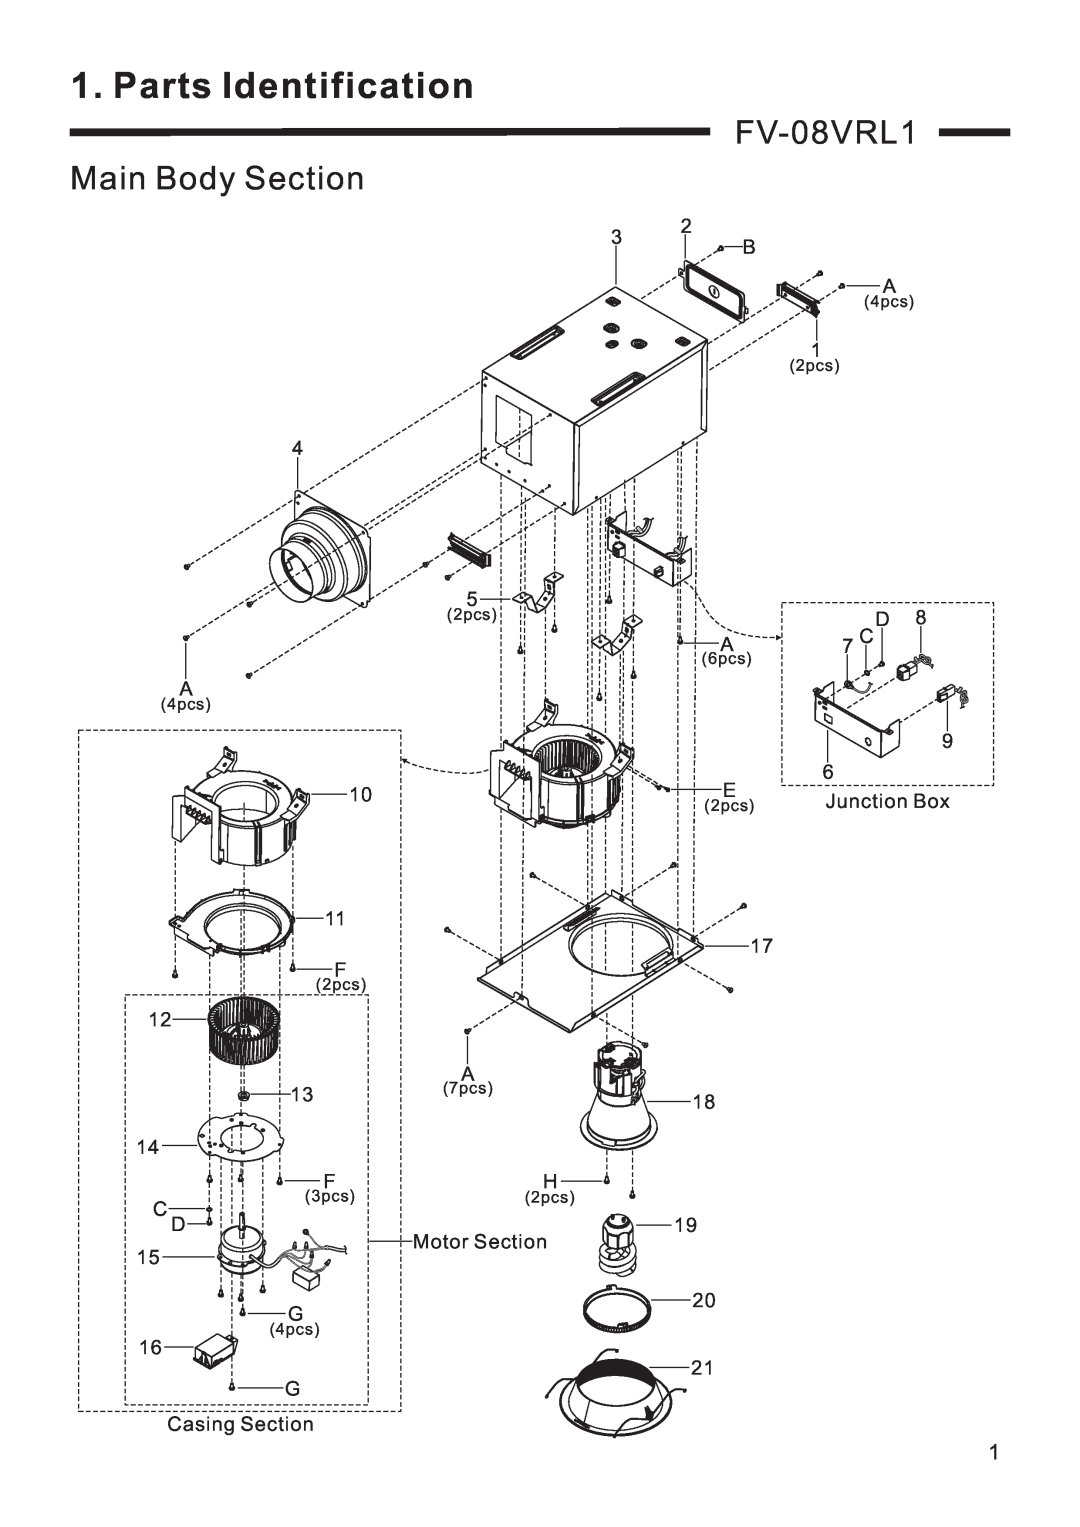 Panasonic service manual Parts Identification, FV-08VRL1 Main Body Section 